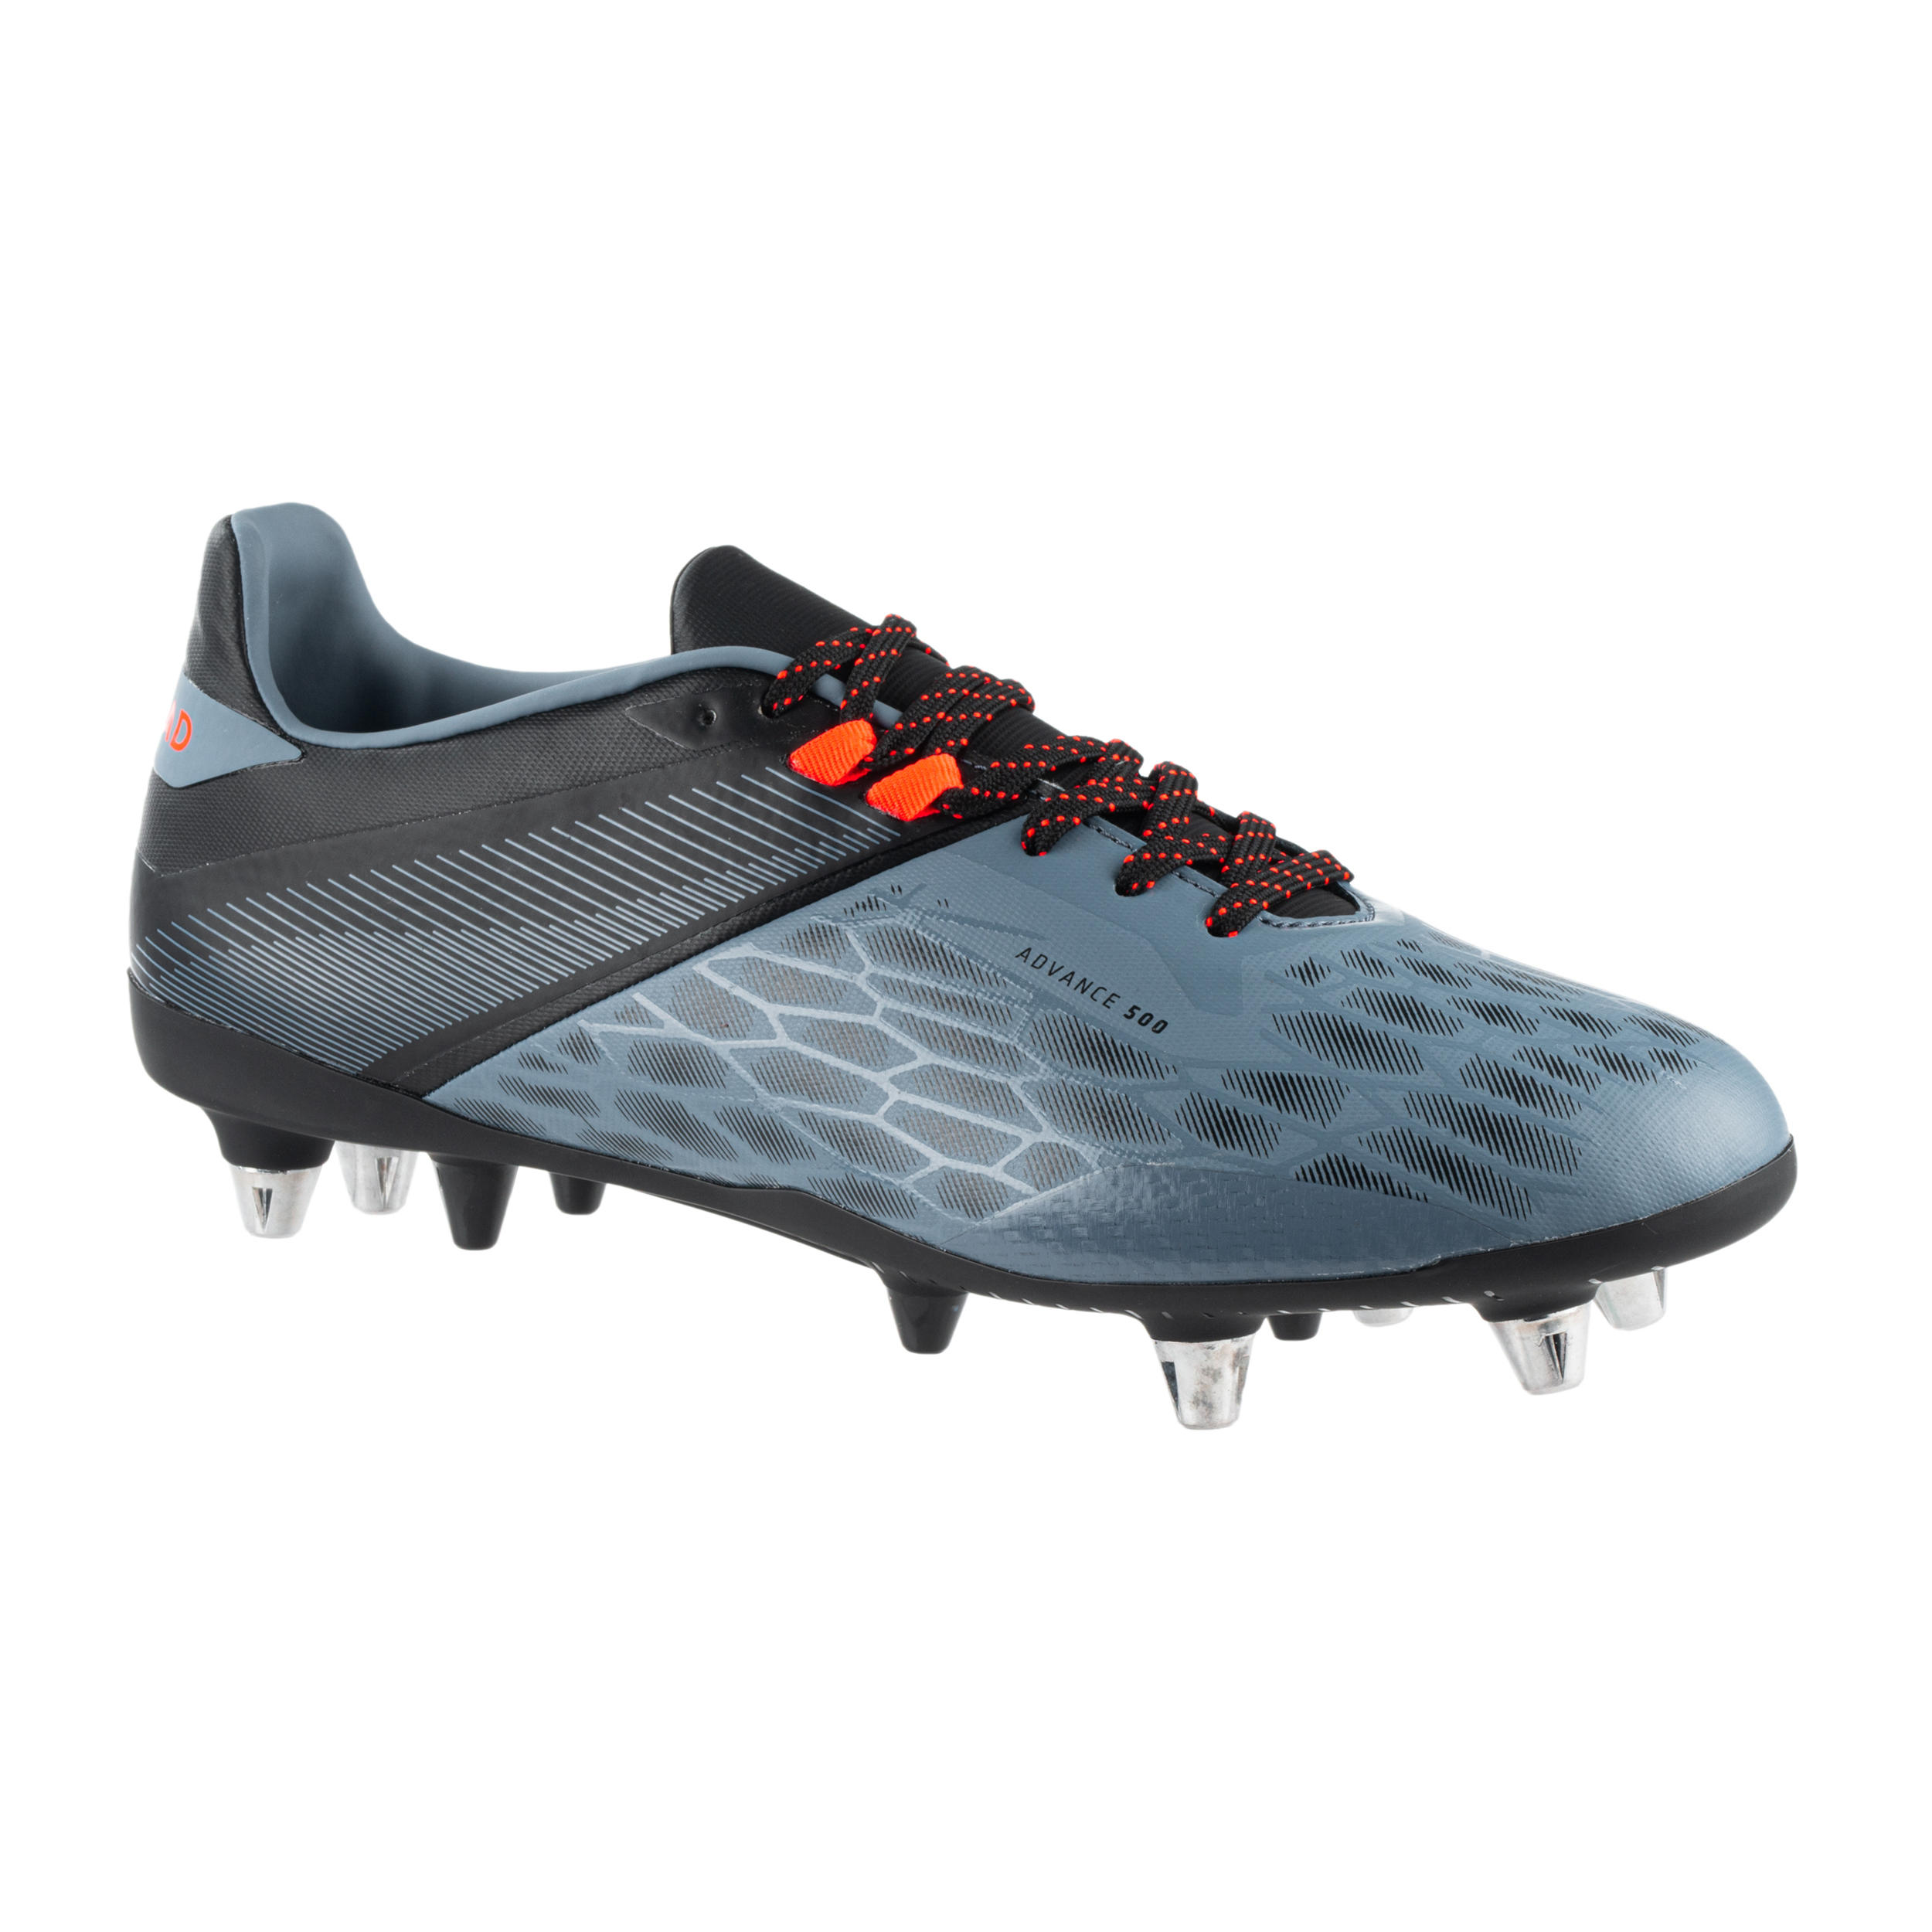 chaussures de rugby terrain gras homme - advance r500 sg hybrid gris orange - offload